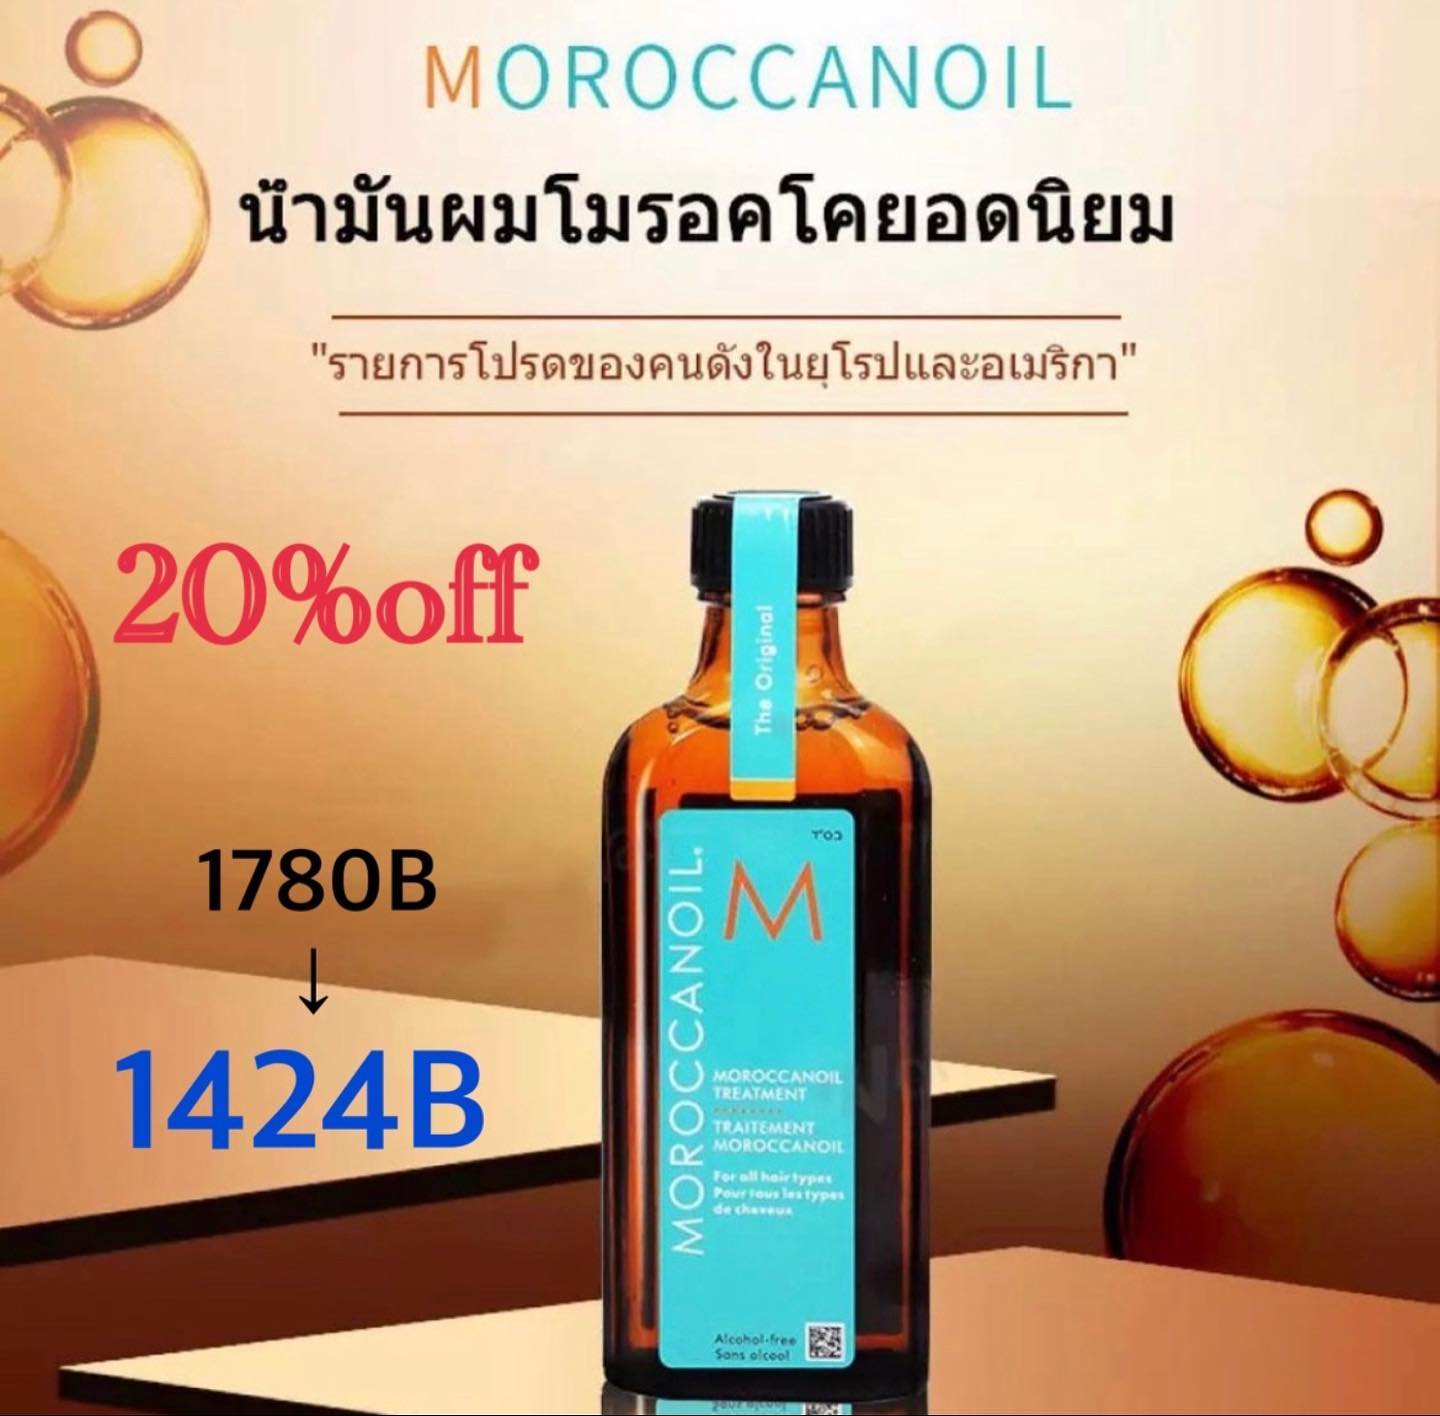 Special Promotion on Aug  Moroccanoil discount 20% ️  1780B→1424B  …………………………  ร้าน Hair Room Sora 299/7 ชั้น1, Sukhumvit Living Town, ซอยสุขุมวิท21(อโศก)
โทรศัพท์ : 02-169-1622
ร้านปิดทุกวันจันทร์ 10.00-19.00 น.
** สำหรับทำเคมี รับจองถึง 17:00 น. **
#Hairroomsora #Hairroomsorabangkok #Hairsalon #Hairstyle #Sukhumvitlivingtown #sukhumvit21 #Japanesesalon #DigitalPerm #デジパ #ヘアールームソラ #fashioncolor #ร้านซาลอนญี่ปุ่น #ซาลอน #ทำผมรับปริญญา #ทำผมออกงาน #รับทำผม #ดัดดิจิตอล #ยืดผม #ย้อมผม ดูน้อยลง